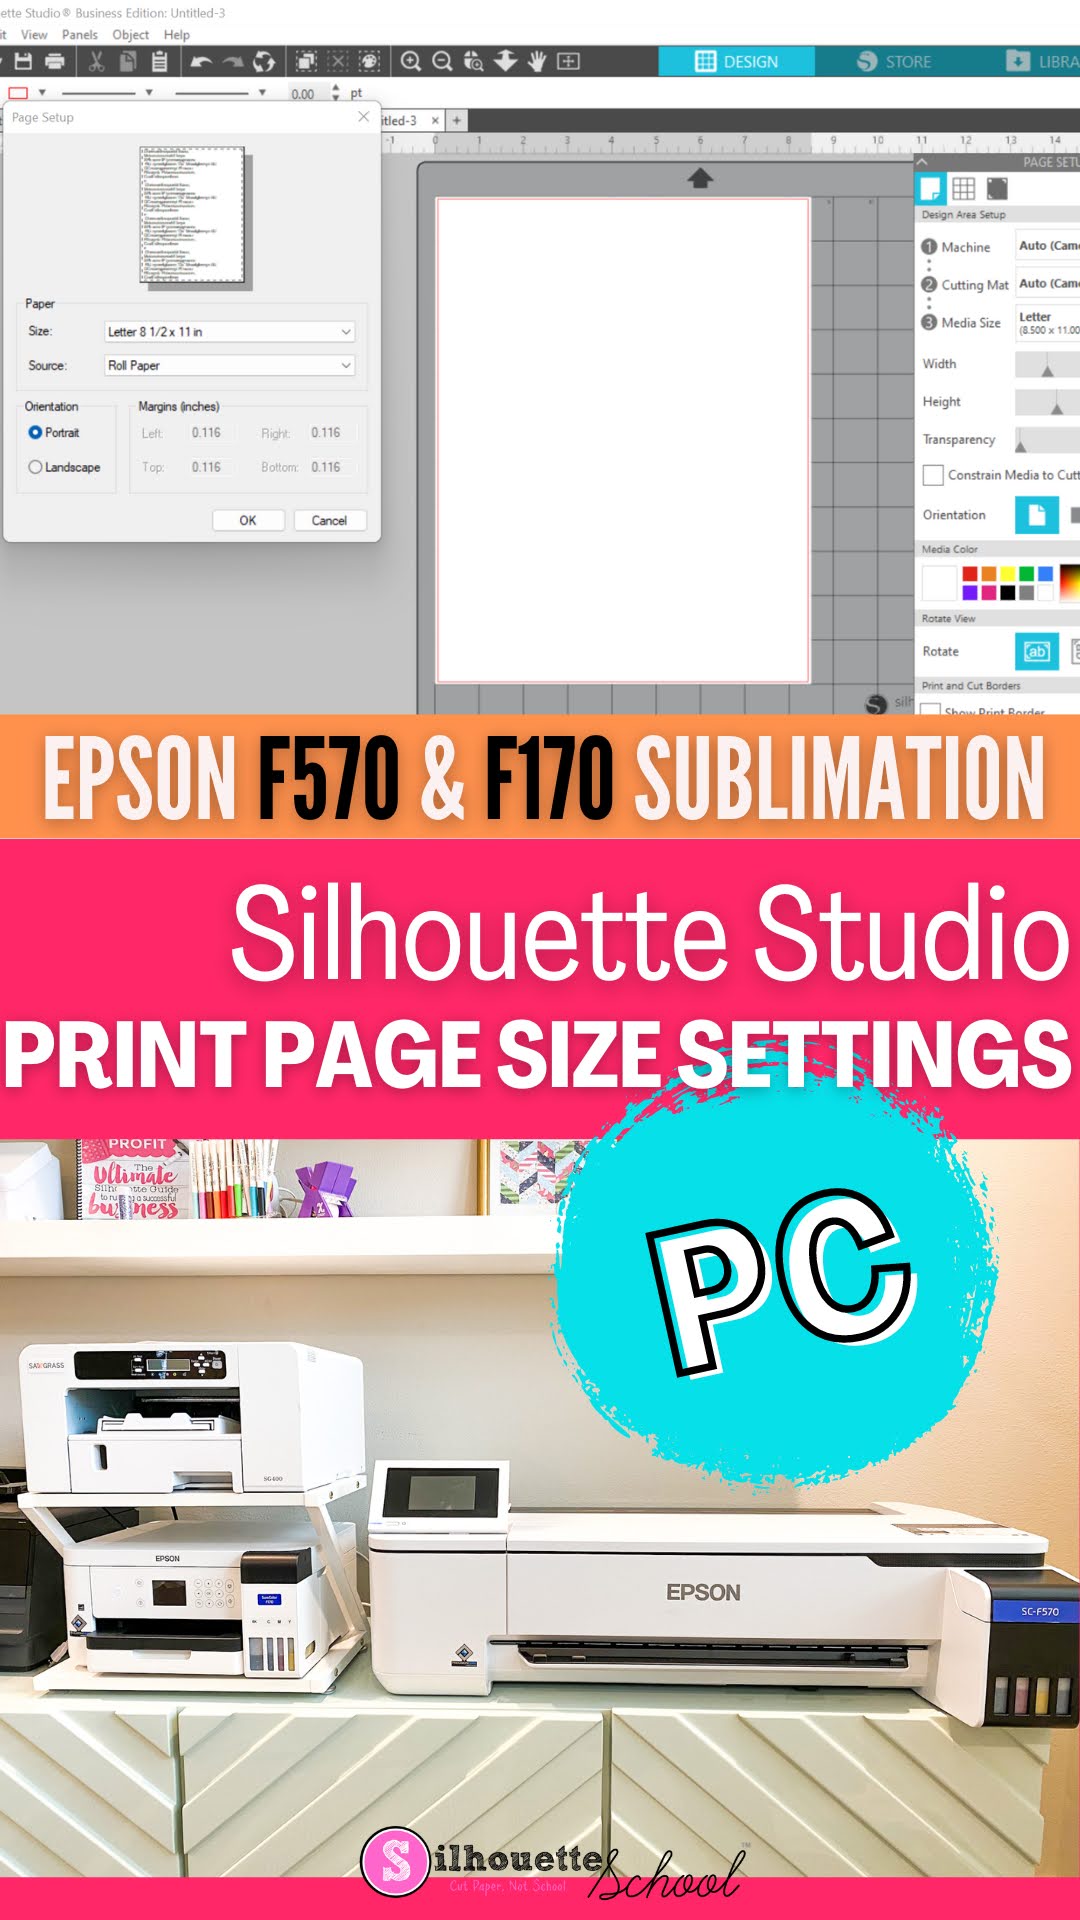 Print Settings for Mug Size sublimation paper - Epson Printer on Windows